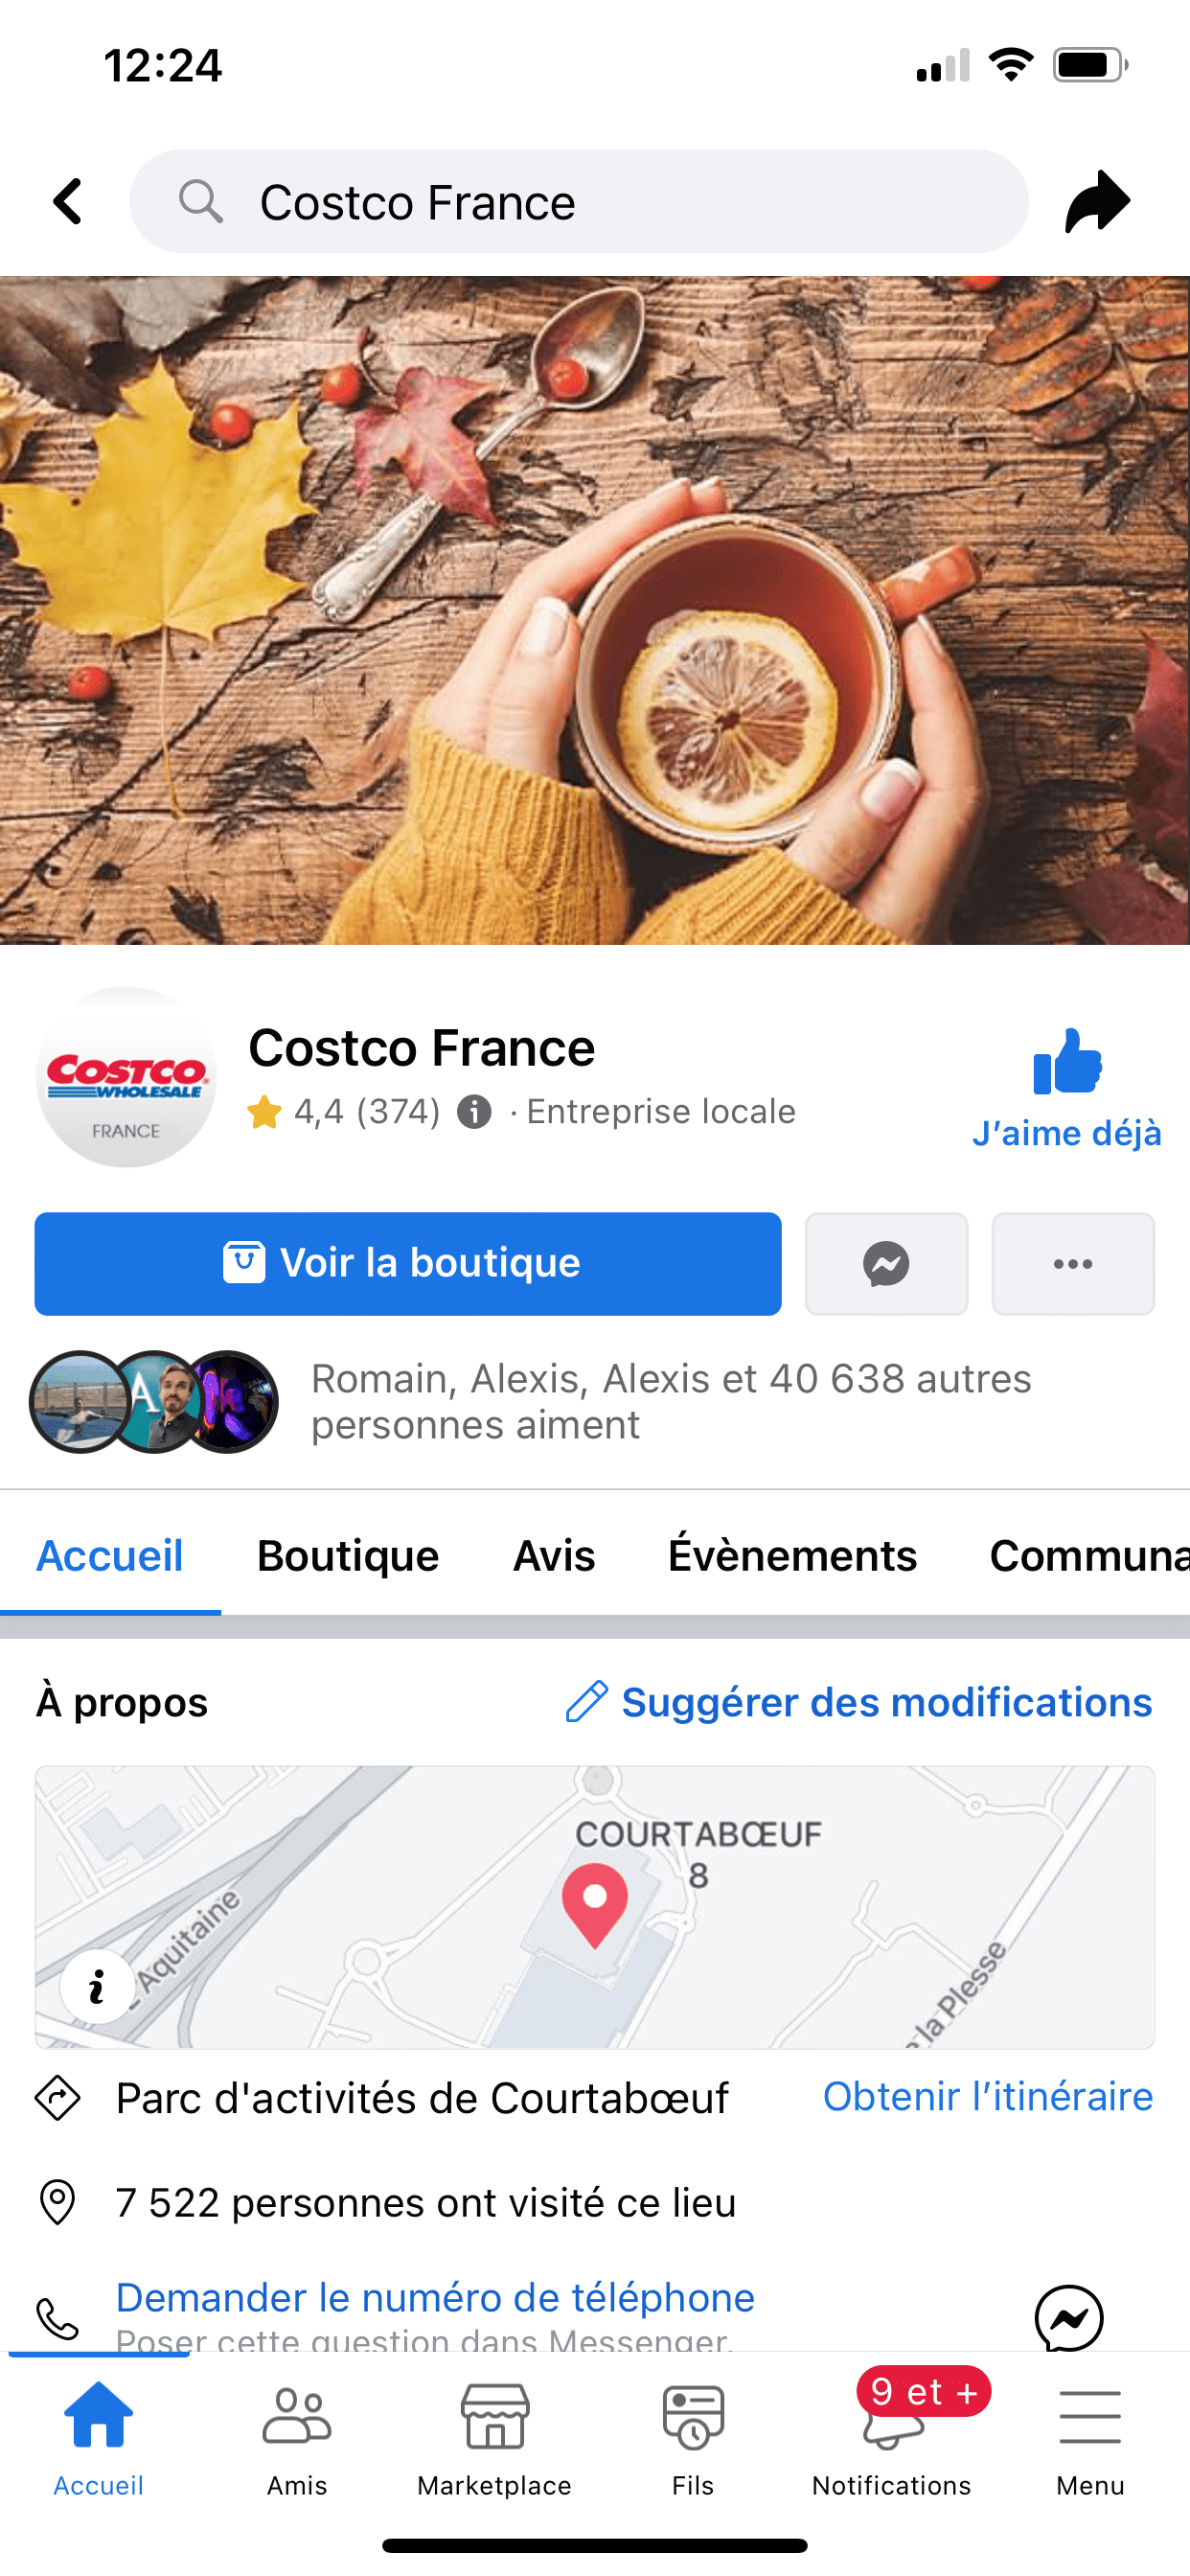 Community management Costco France